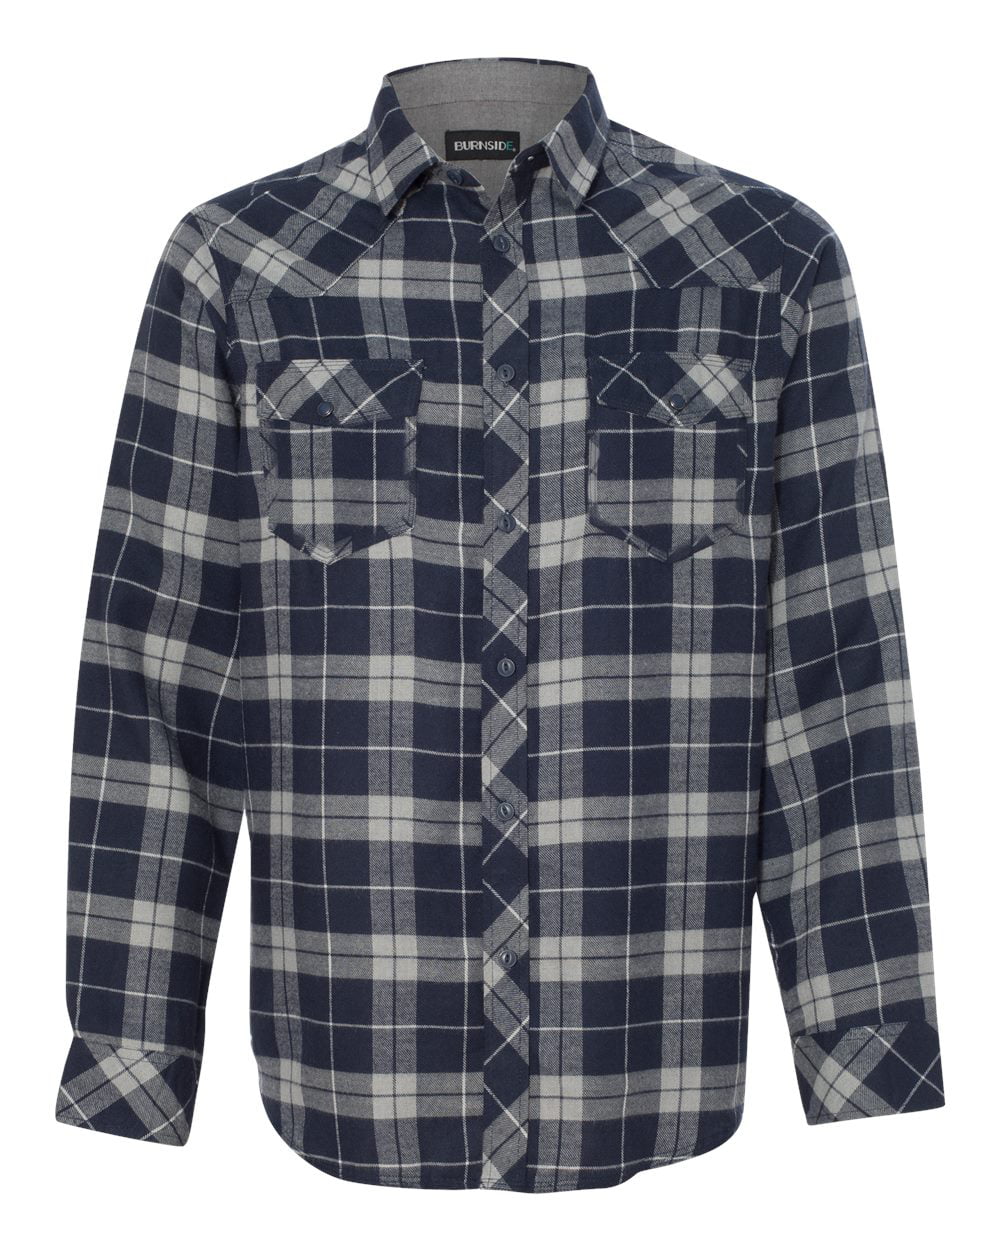 Burnside Men's Yarn-Dyed Long Sleeve Flannel Shirt